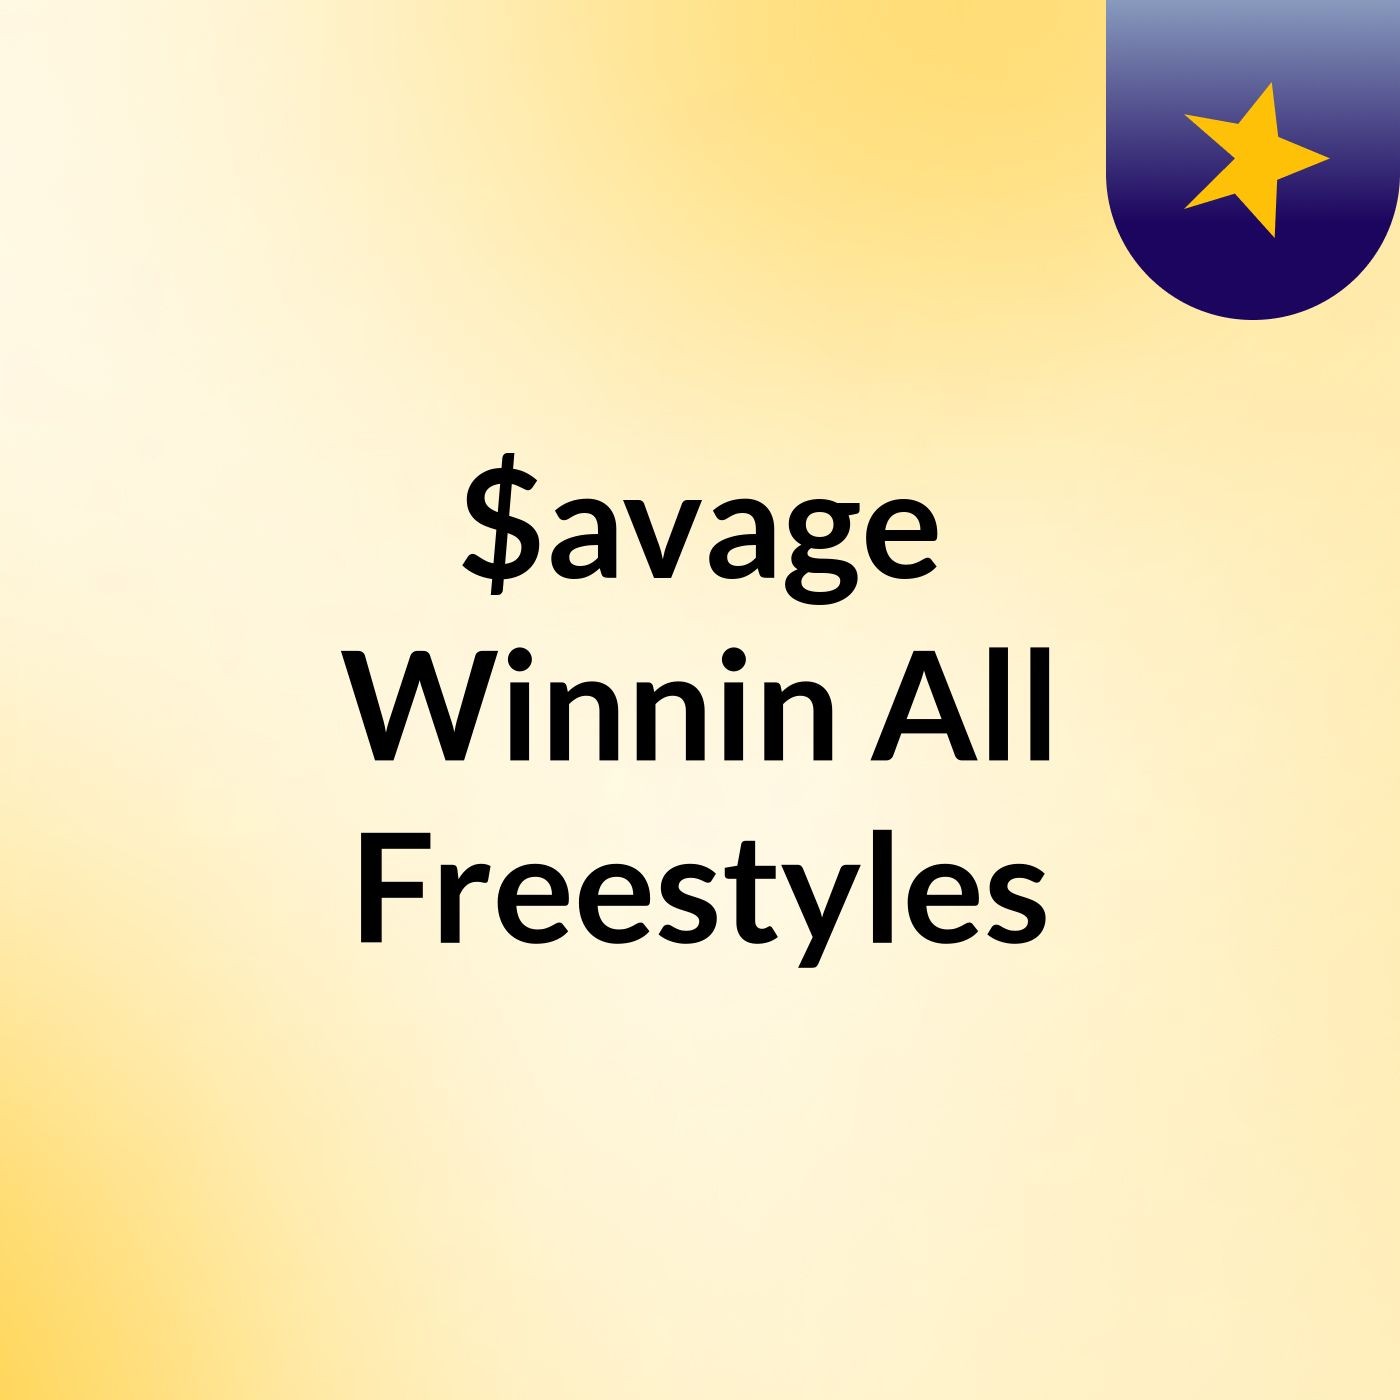 $avage Winnin All Freestyles